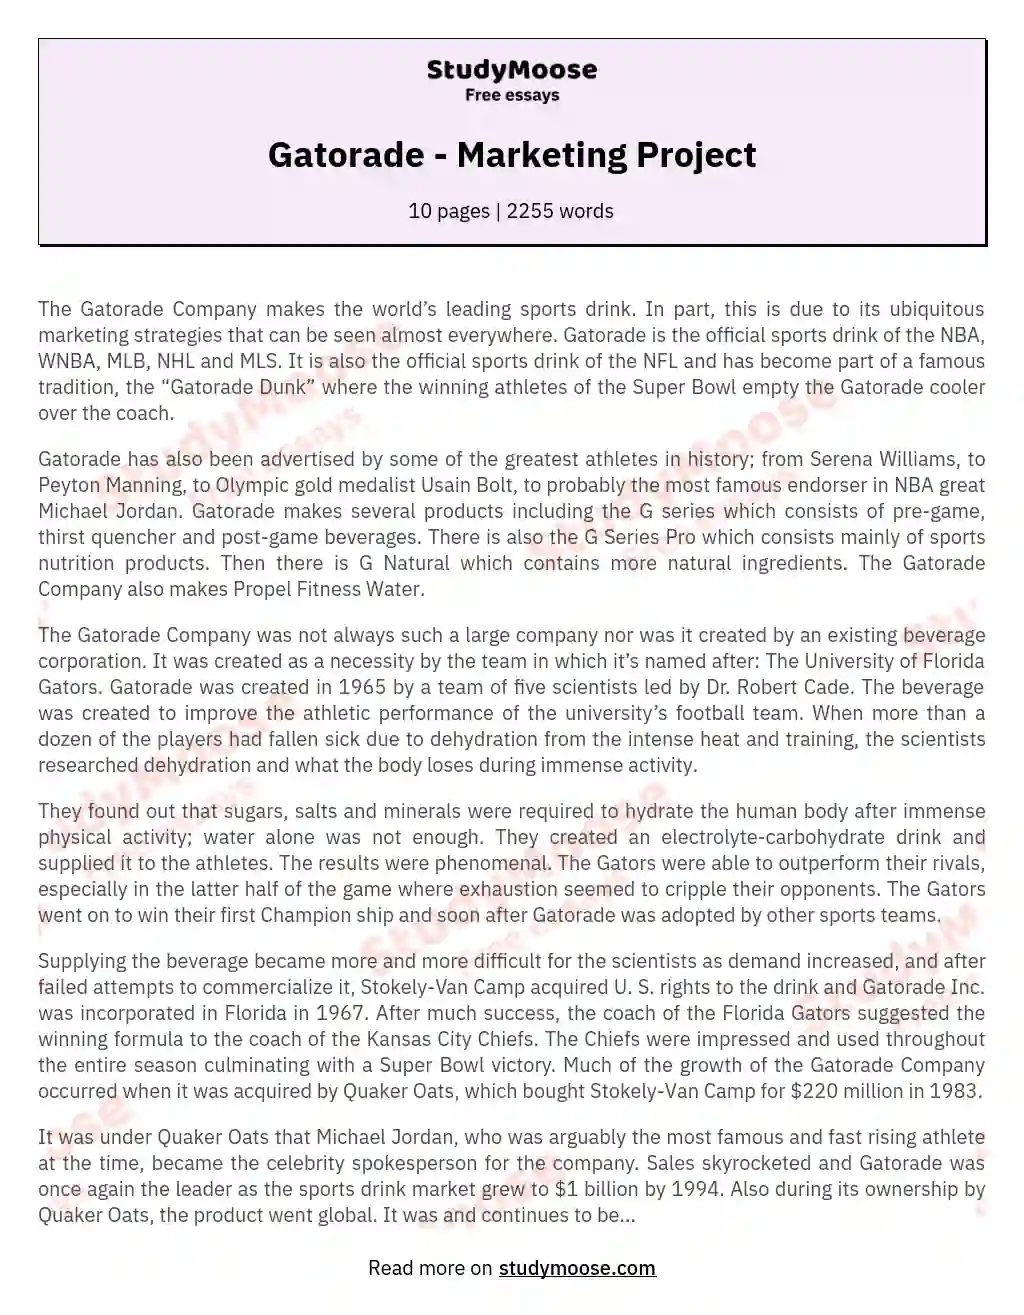 Gatorade - Marketing Project essay